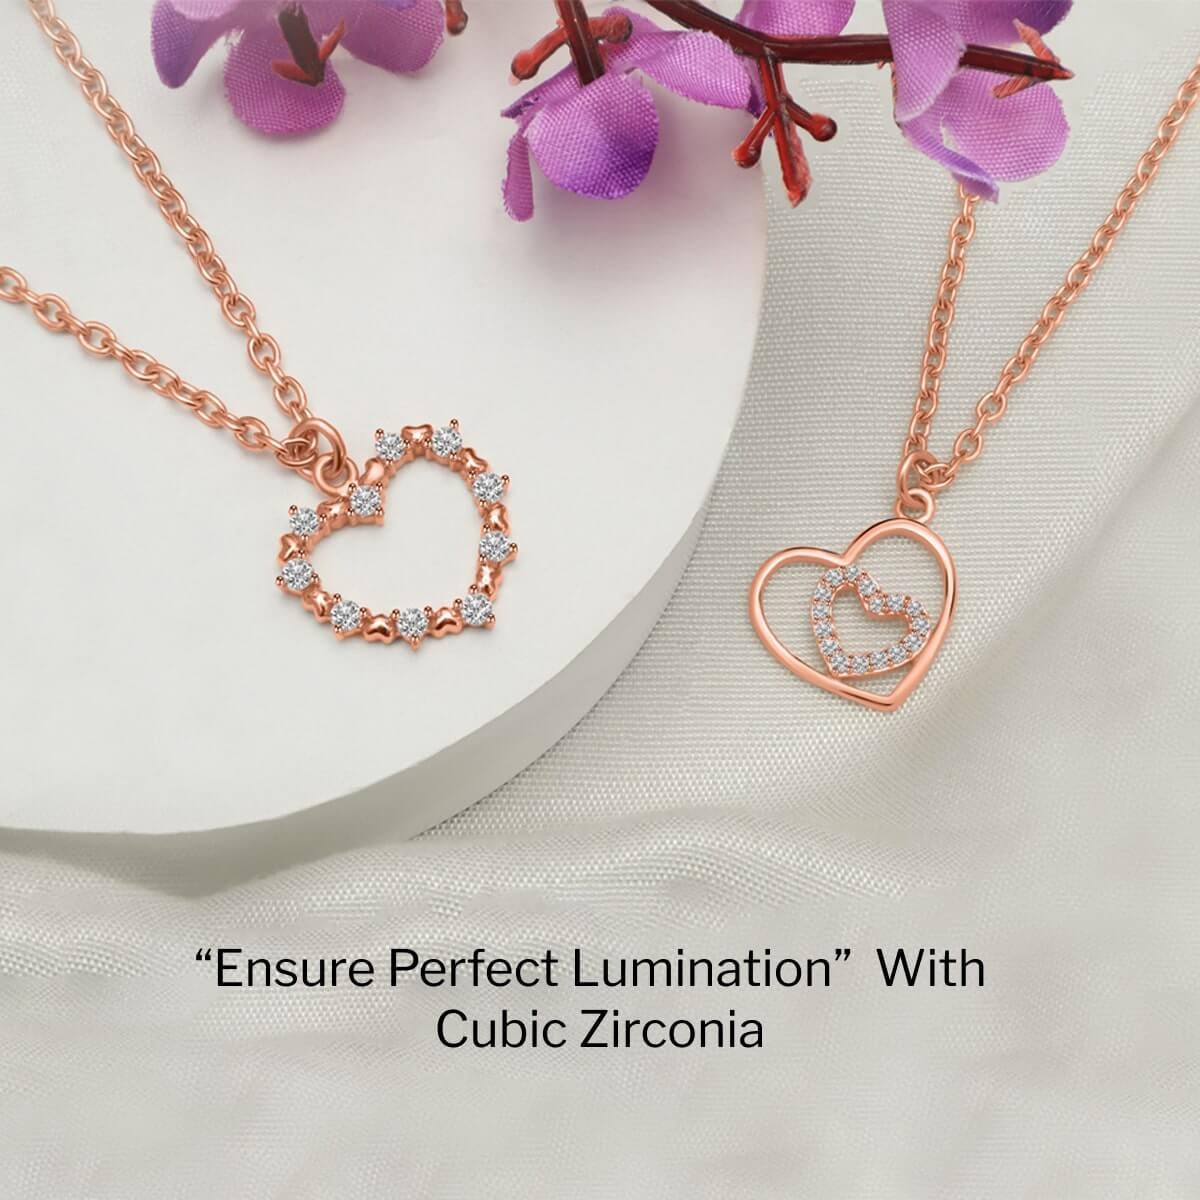 Cubic Zirconia gemstone